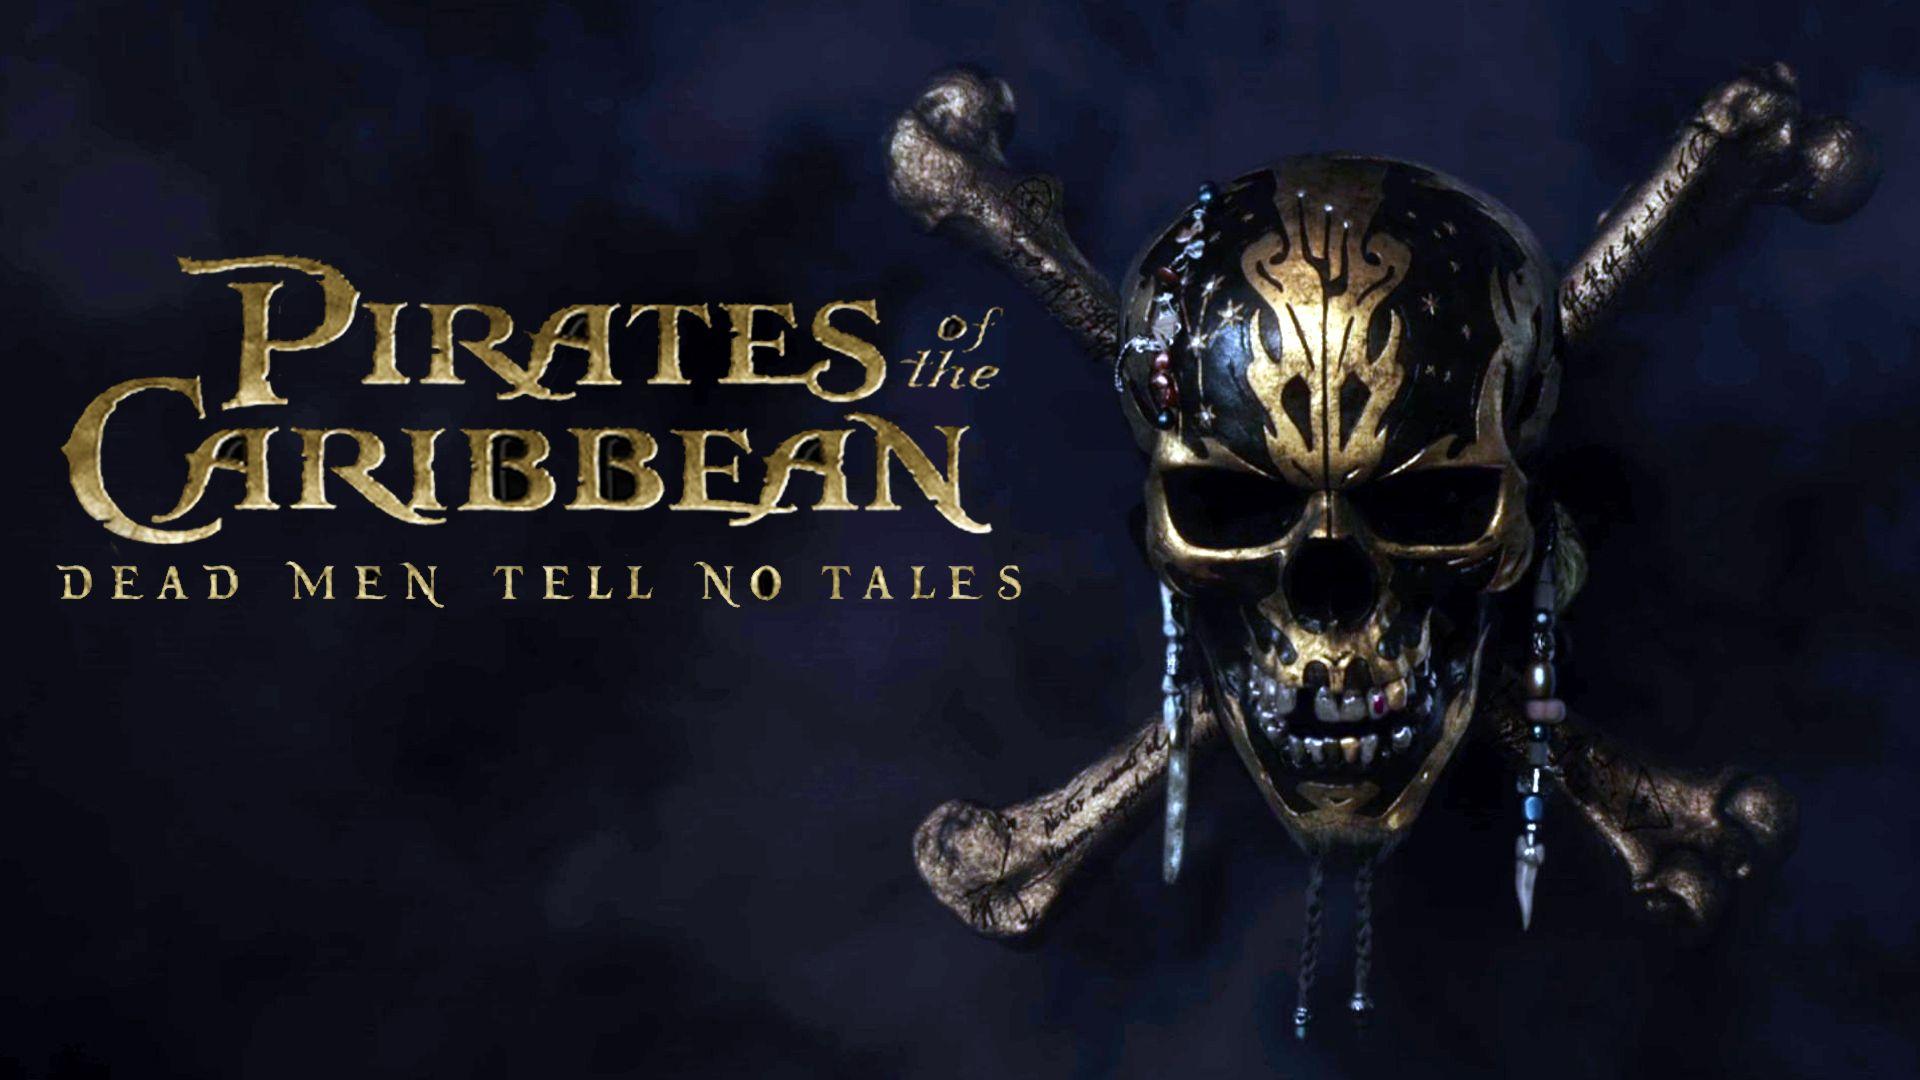 Pirates of the Caribbean Dead Men Tell No Tales Wallpaper 35